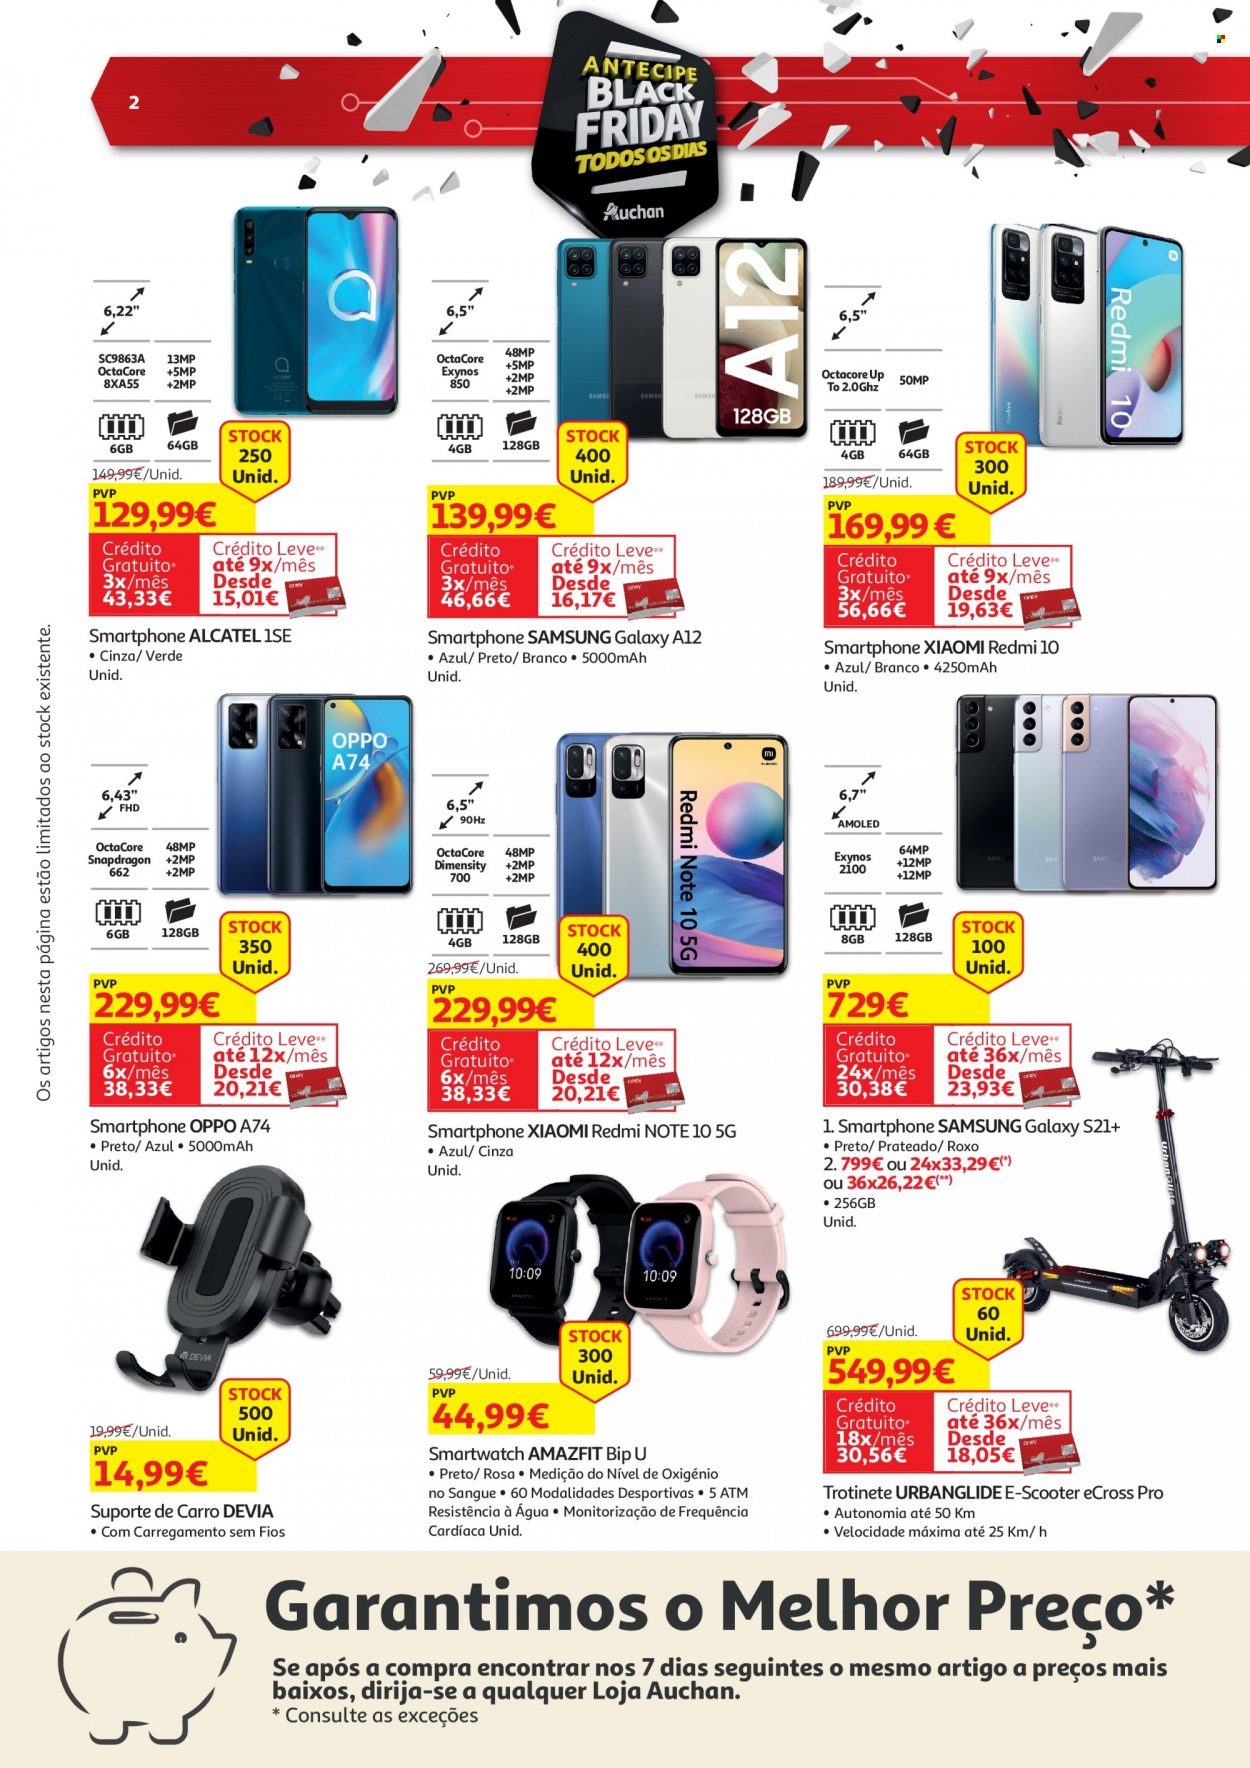 thumbnail - Folheto Auchan - 15.11.2021 - 21.11.2021 - Produtos em promoção - Samsung, Alcatel, Samsung Galaxy, Samsung Galaxy S, Redmi, smartwatch, trotinete. Página 2.